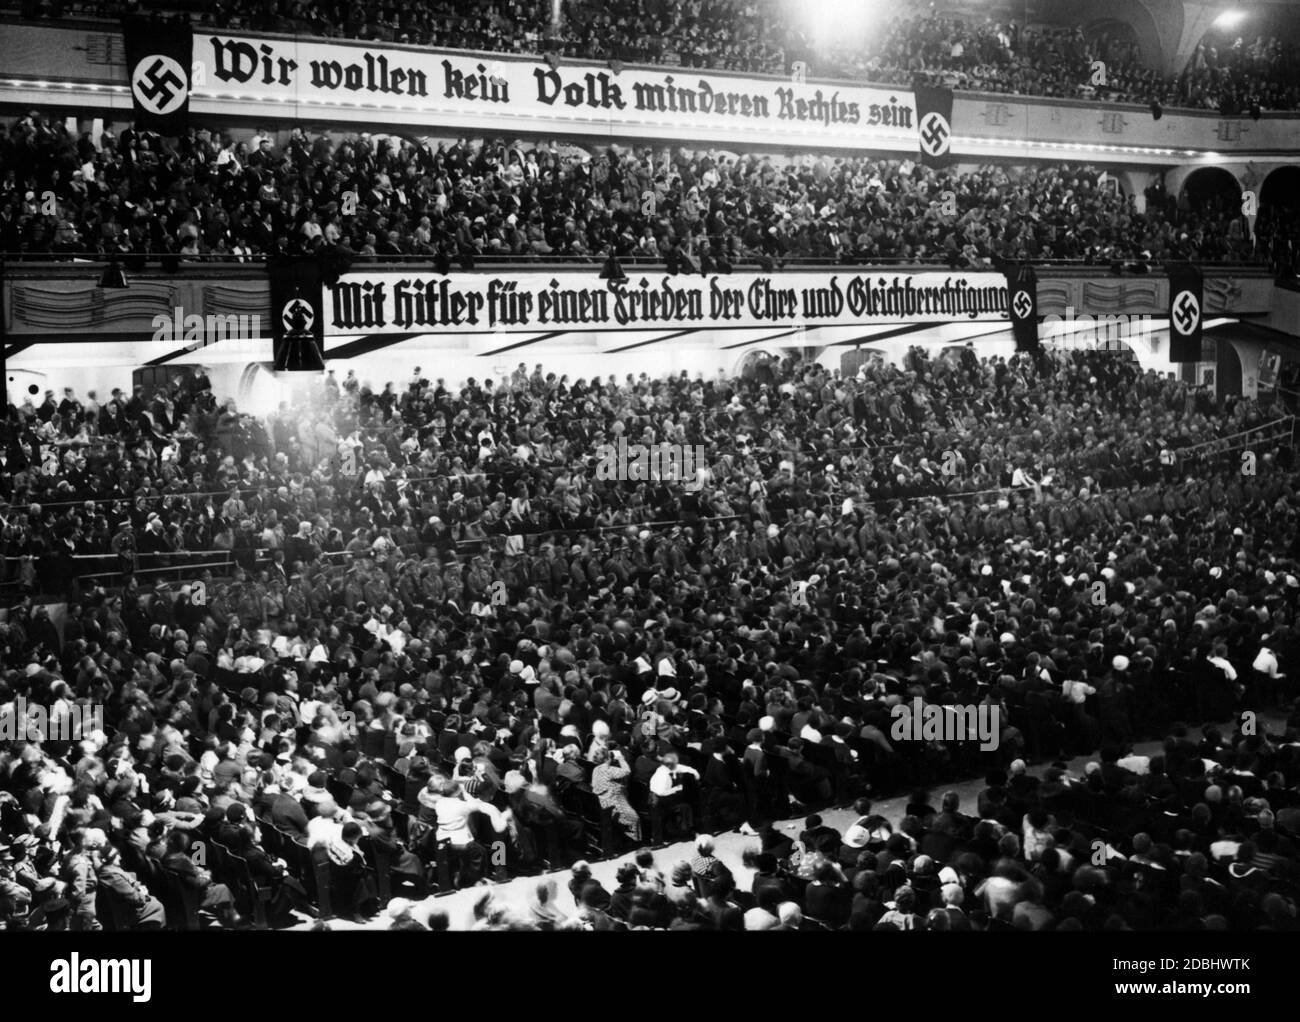 'Banner con le parole ''Wir wollen kein Volk minderen Rechtes sein'' (''non vogliamo essere una nazione con diritti inferiori'') su un banner che dice '''''IT Hitler fuer einen Frieden der Ehre und Gleichberechtigung'' (''con Hitler per una pace d'onore e uguaglianza') in un rally. Foto Stock